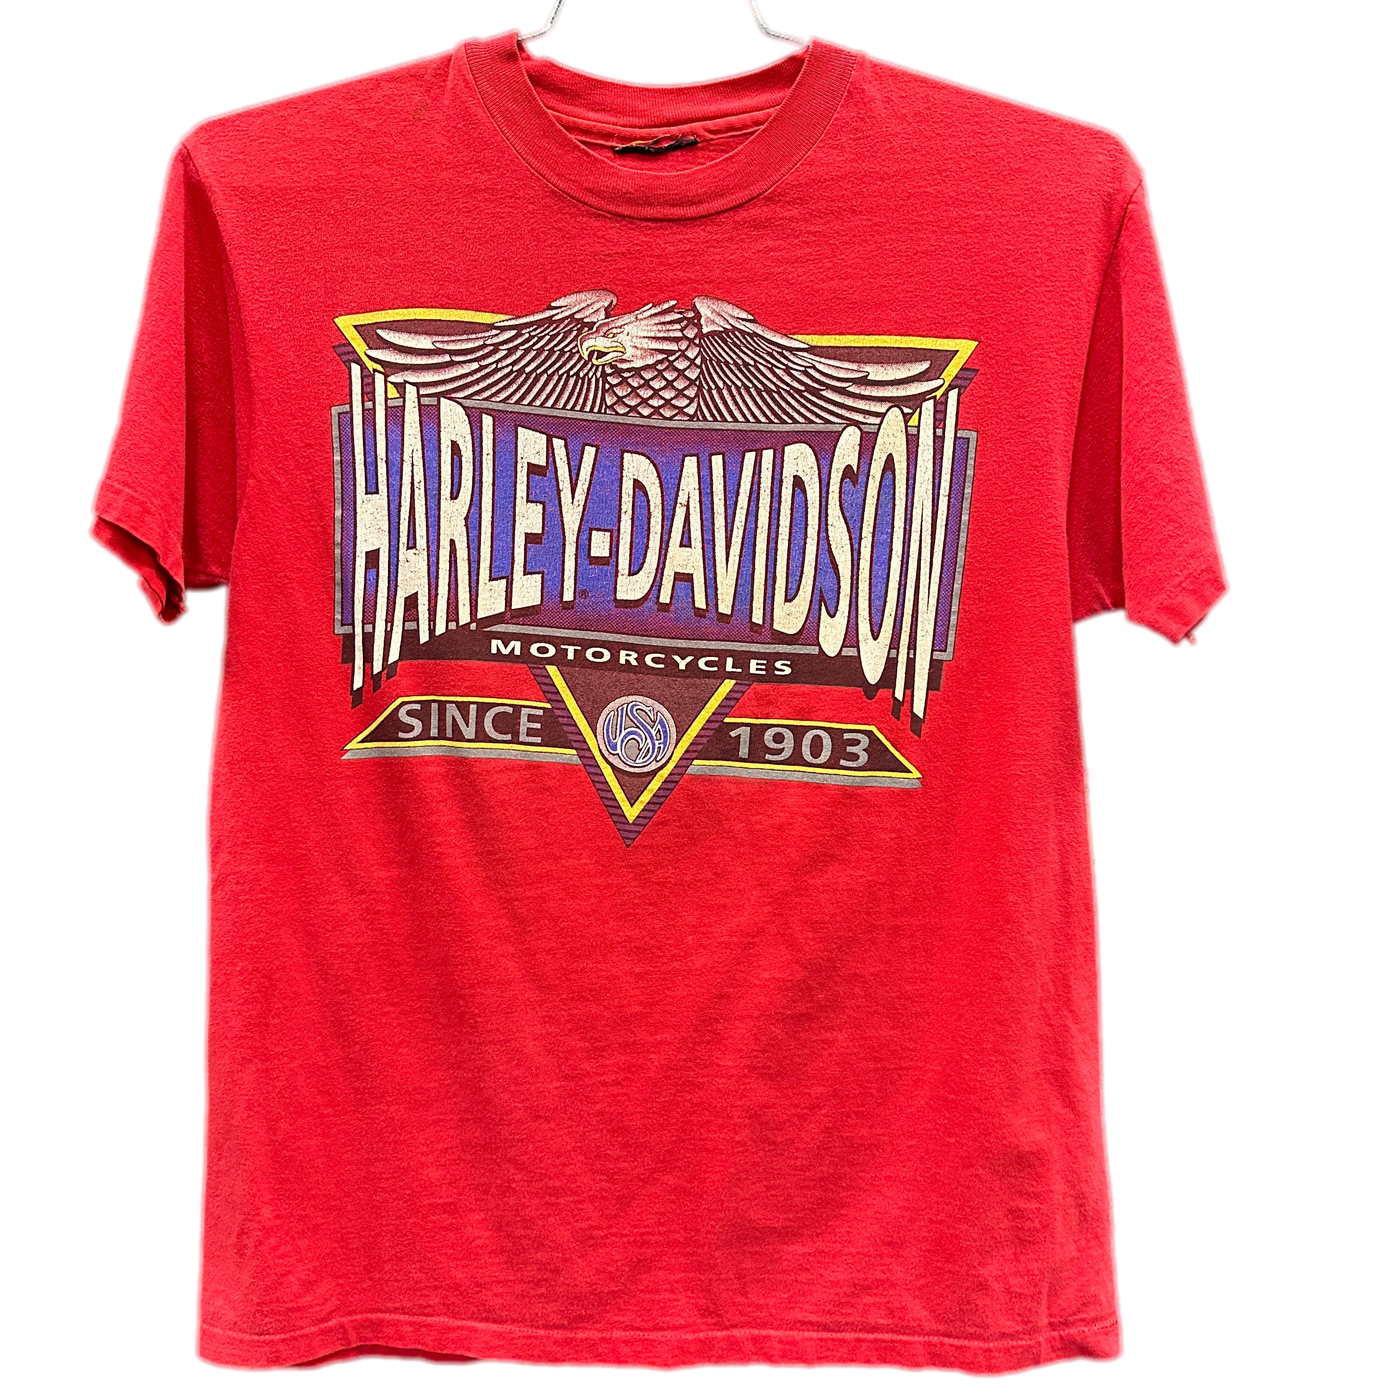 '92 Red Harley Davidson Motorcycles T-shirt sz M